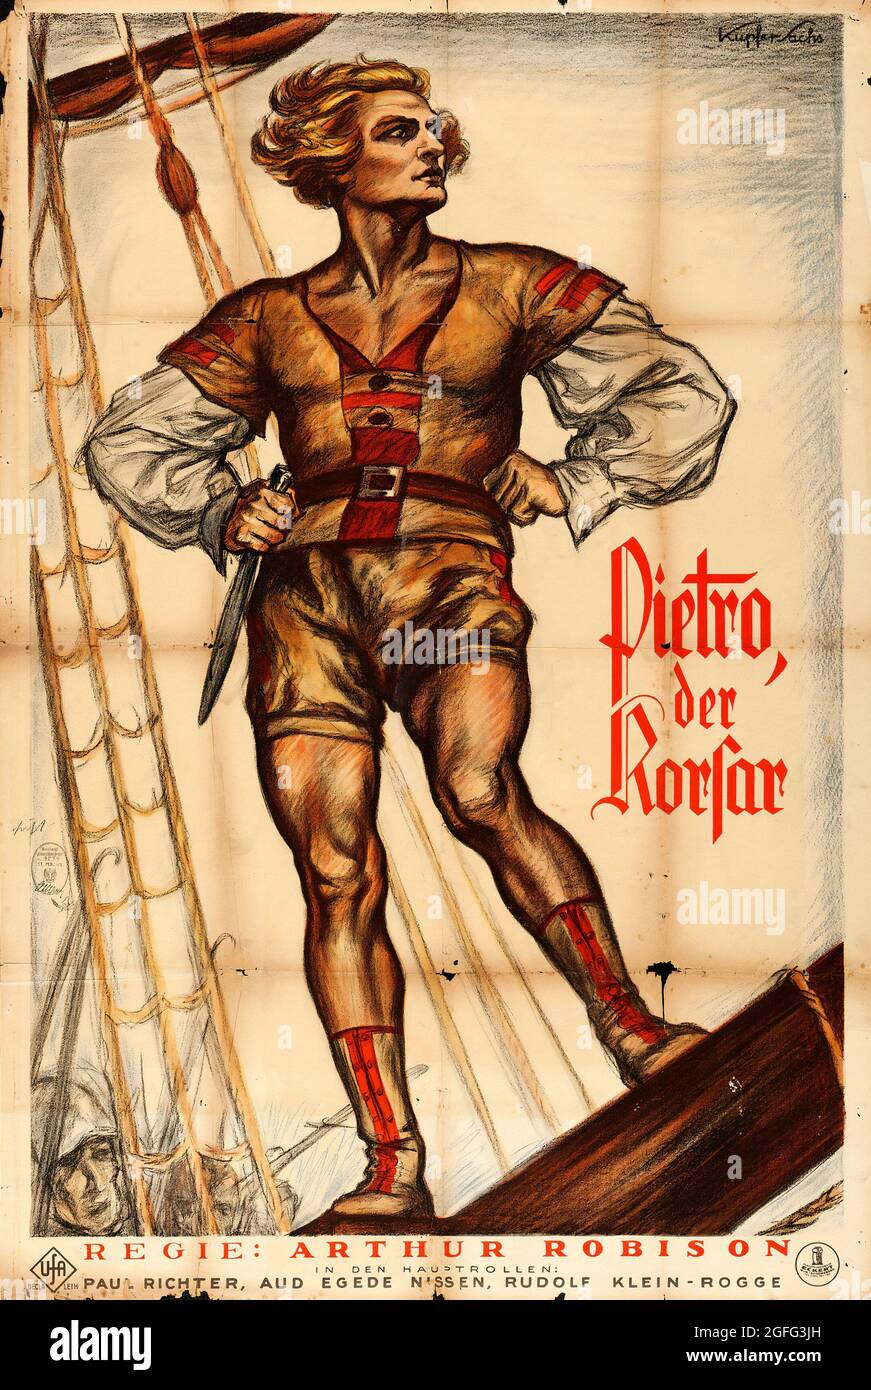 Pietro der Korsar – The Love Pirate (UFA, 1925). German Movie Poster. Julius Kupfer-Sachs Artwork. Stock Photo